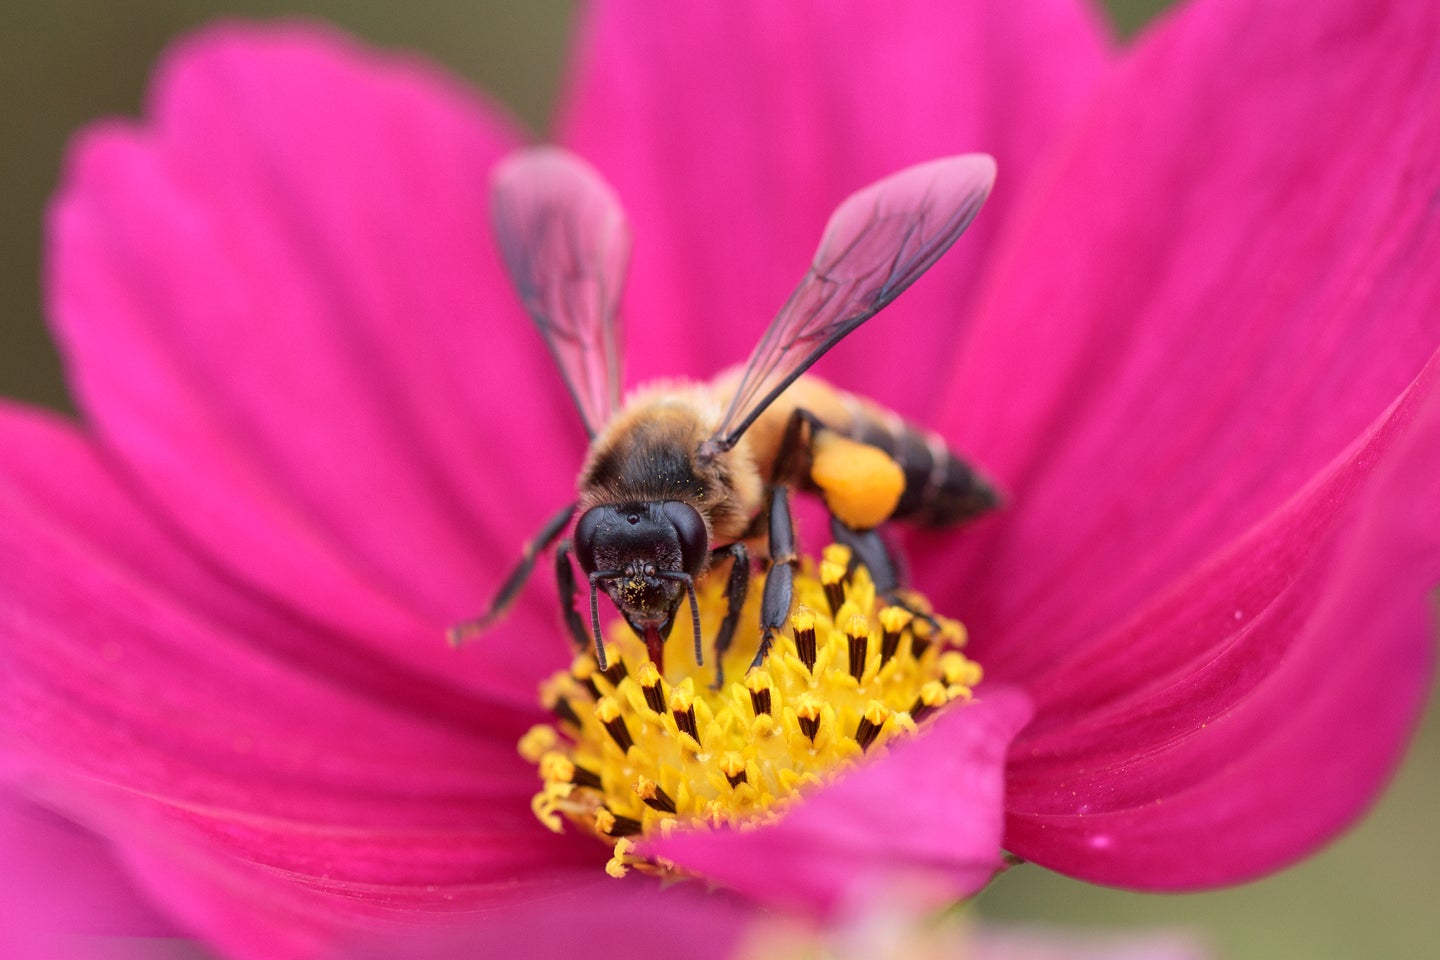 Honeybee pollinating a flower